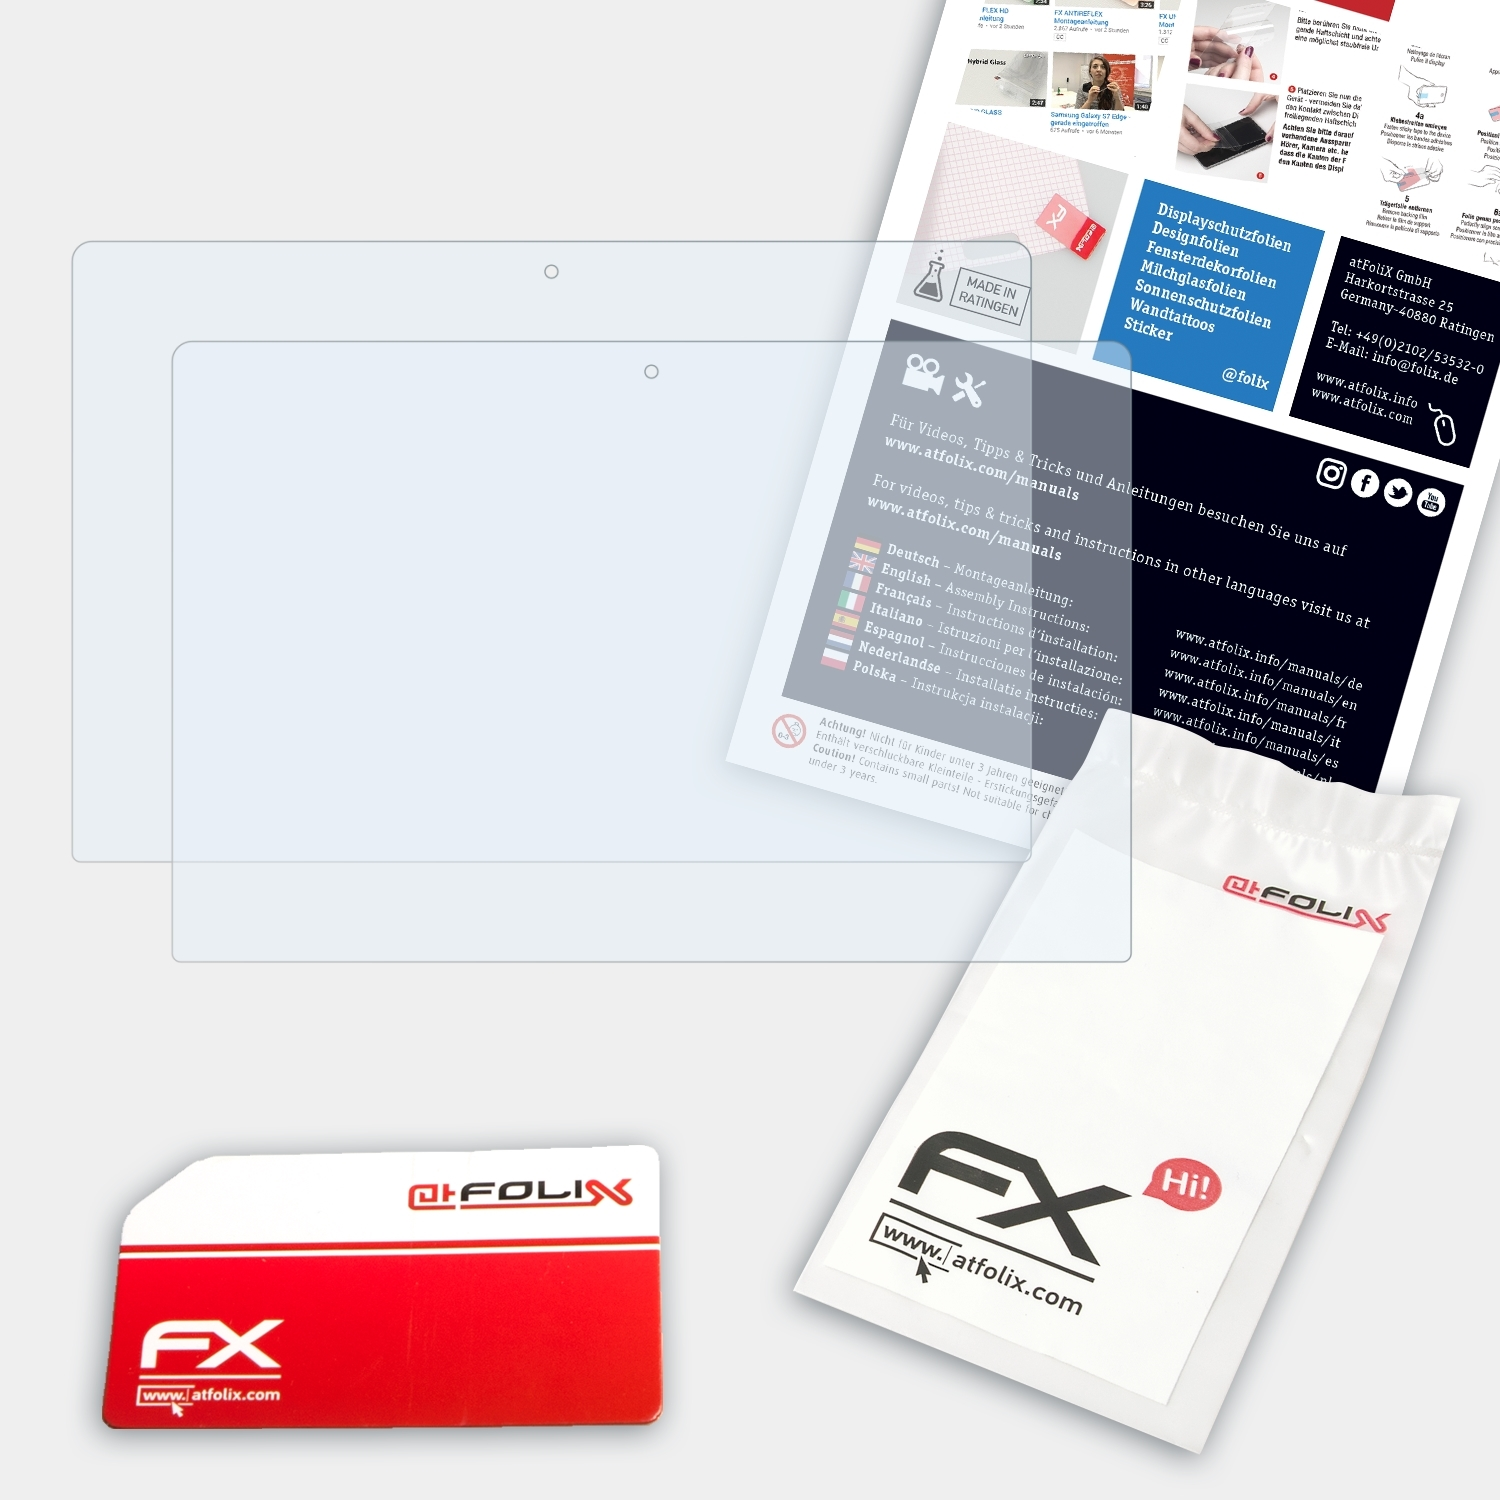 Asus ATFOLIX 2x Displayschutz(für S400CA) VivoBook FX-Clear